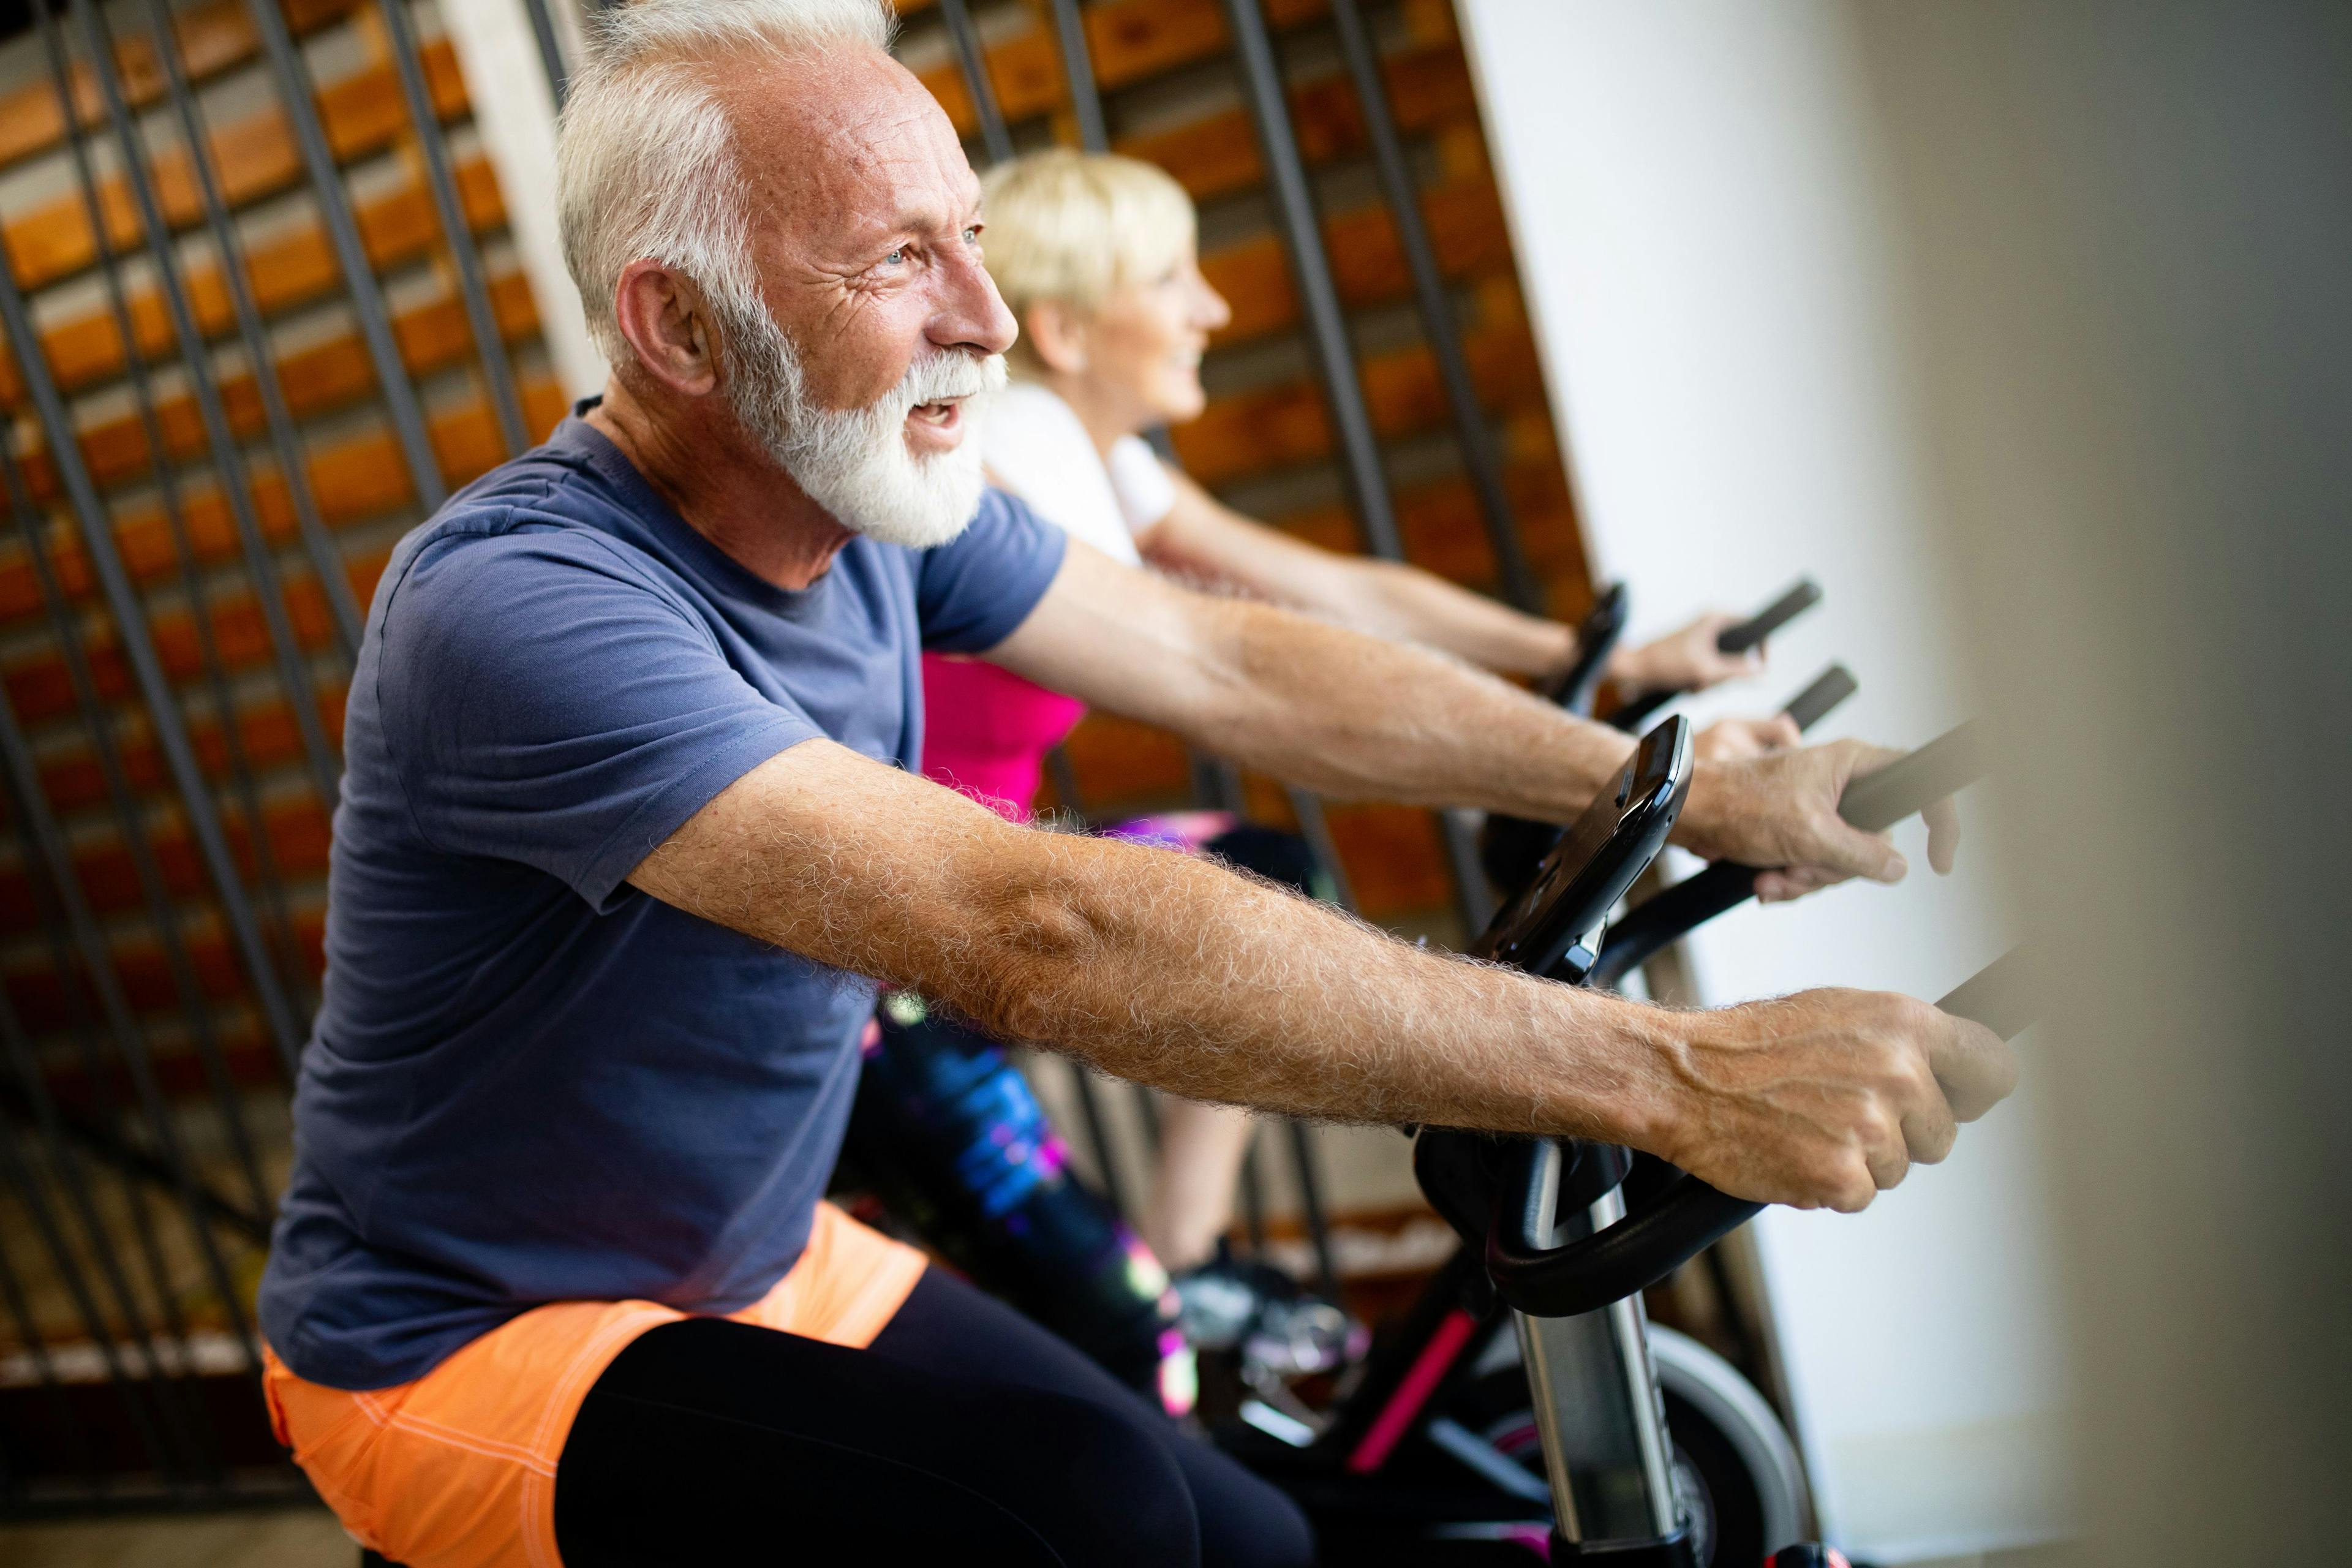 Elderly people exercising